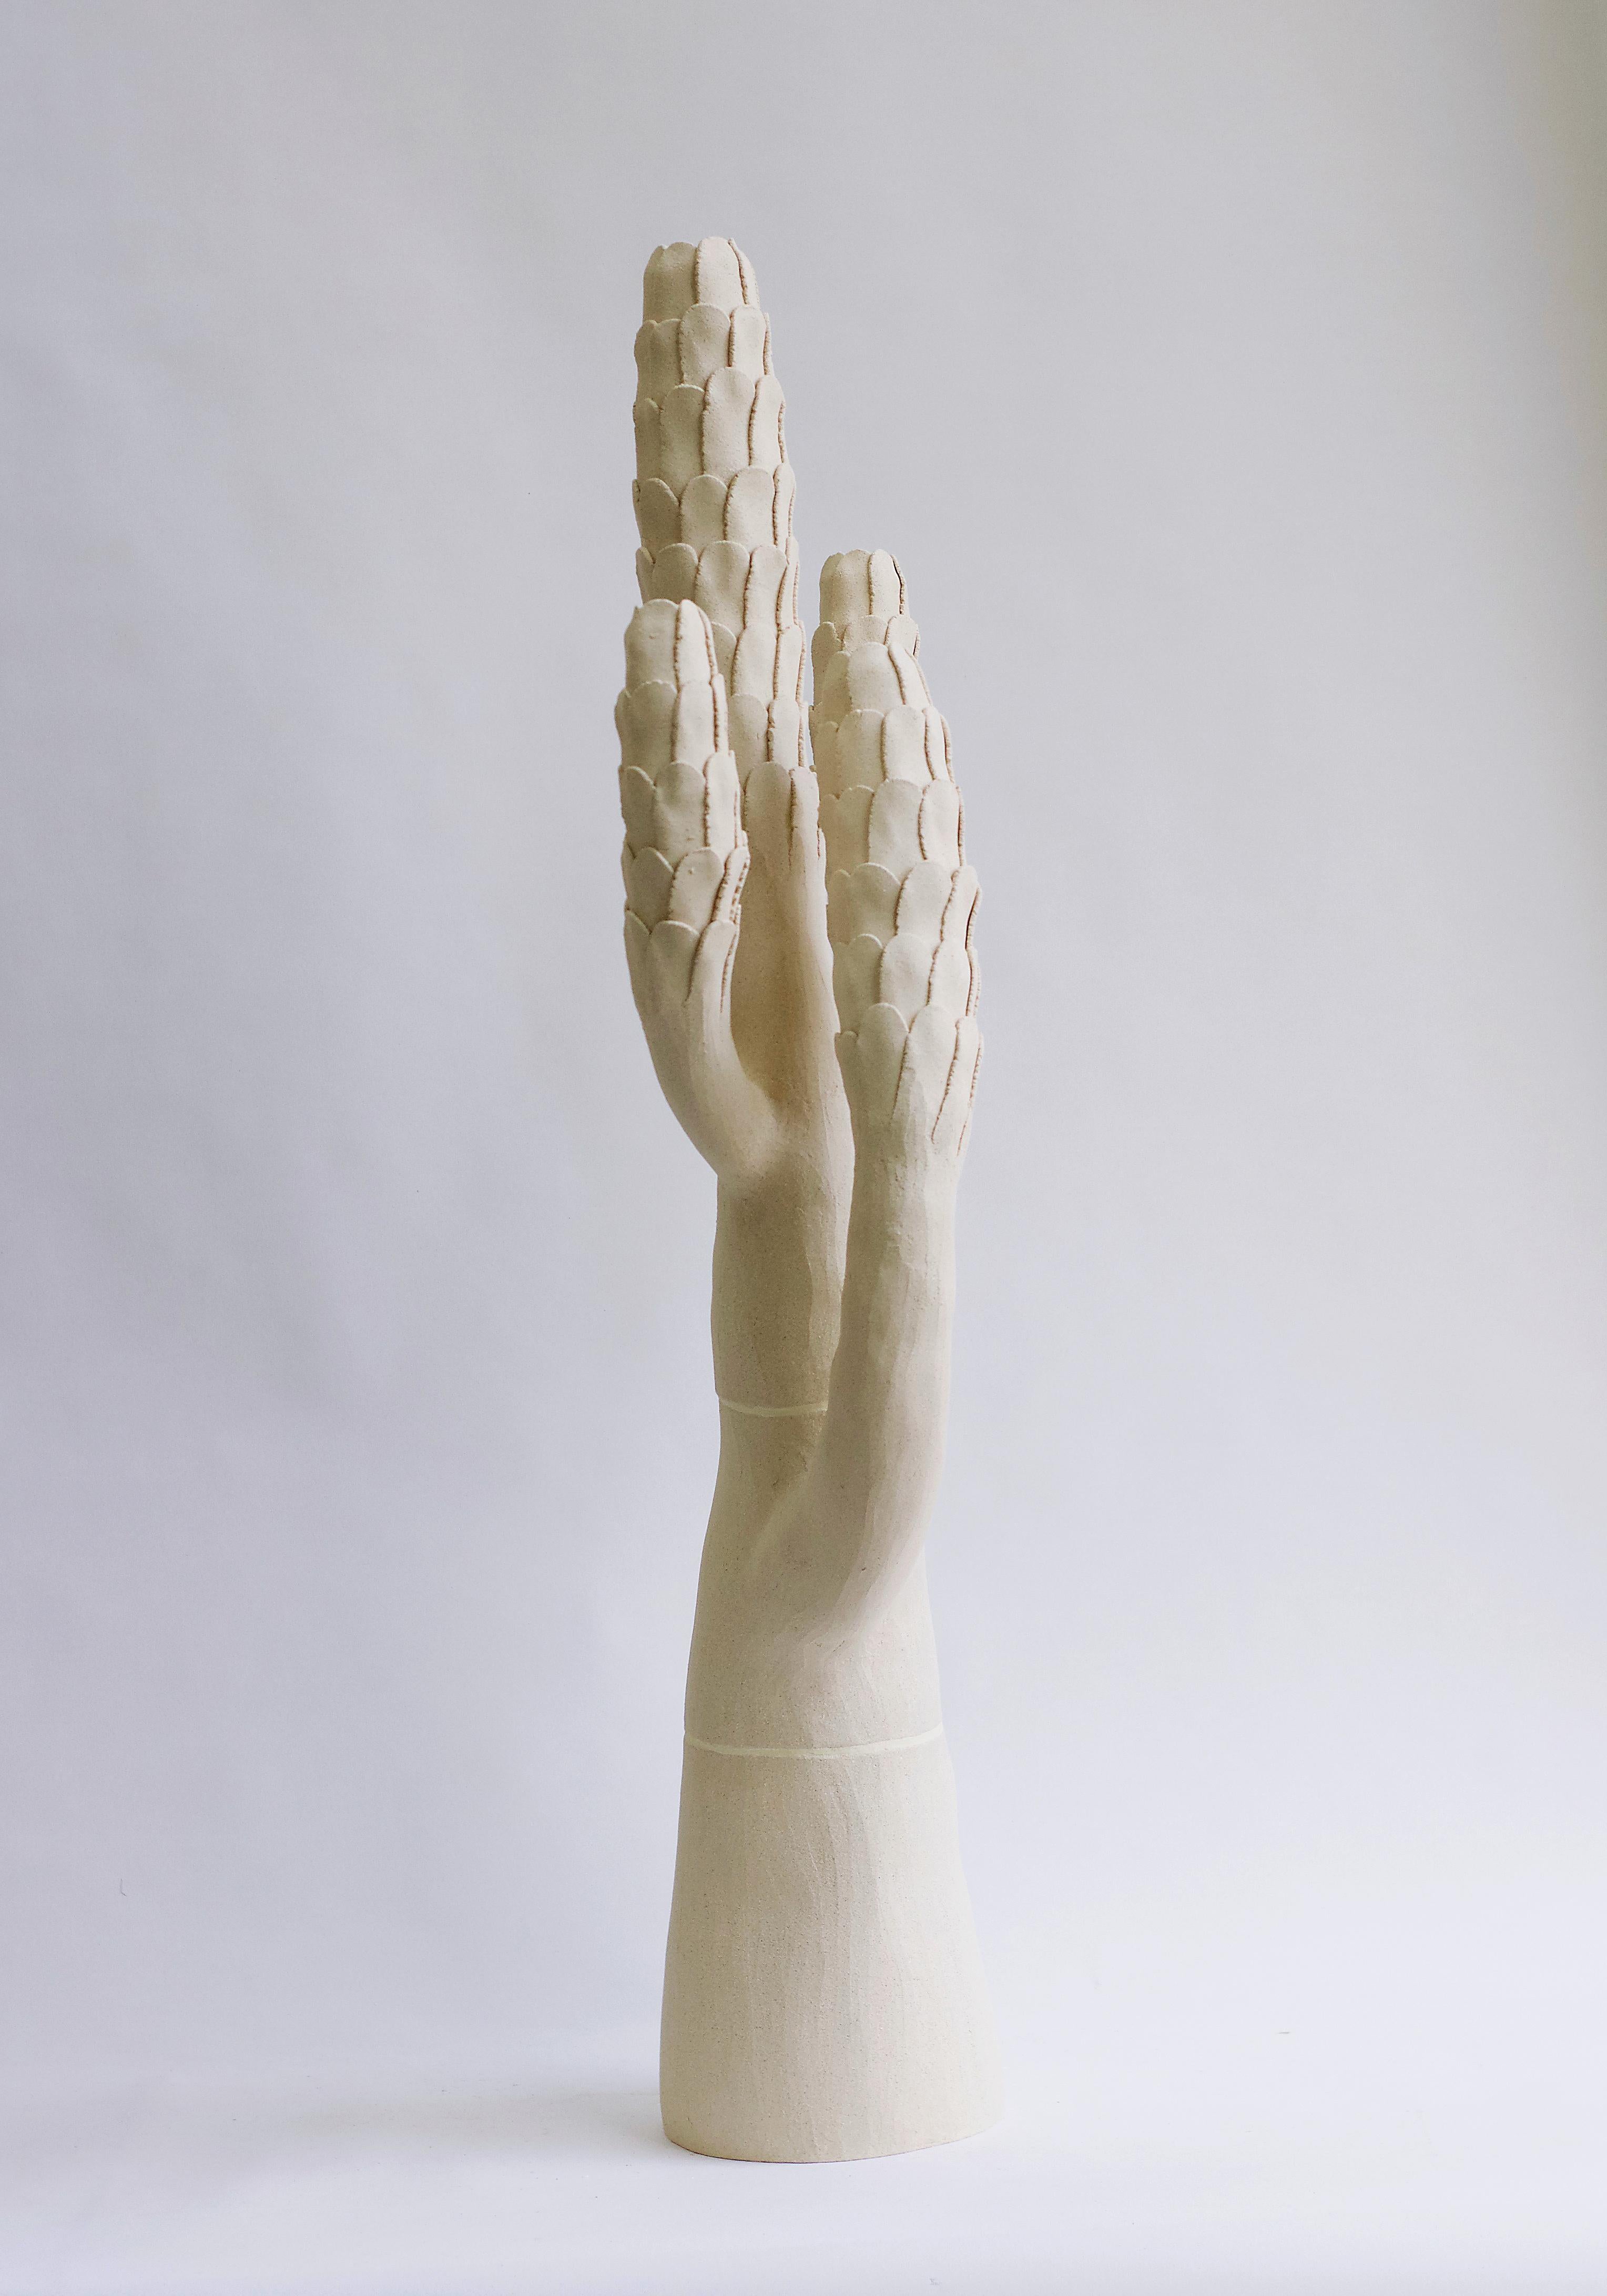 Minimalist White Contemporary Ceramic Tree Sculpture, Arbre Blanc Ecailles  For Sale